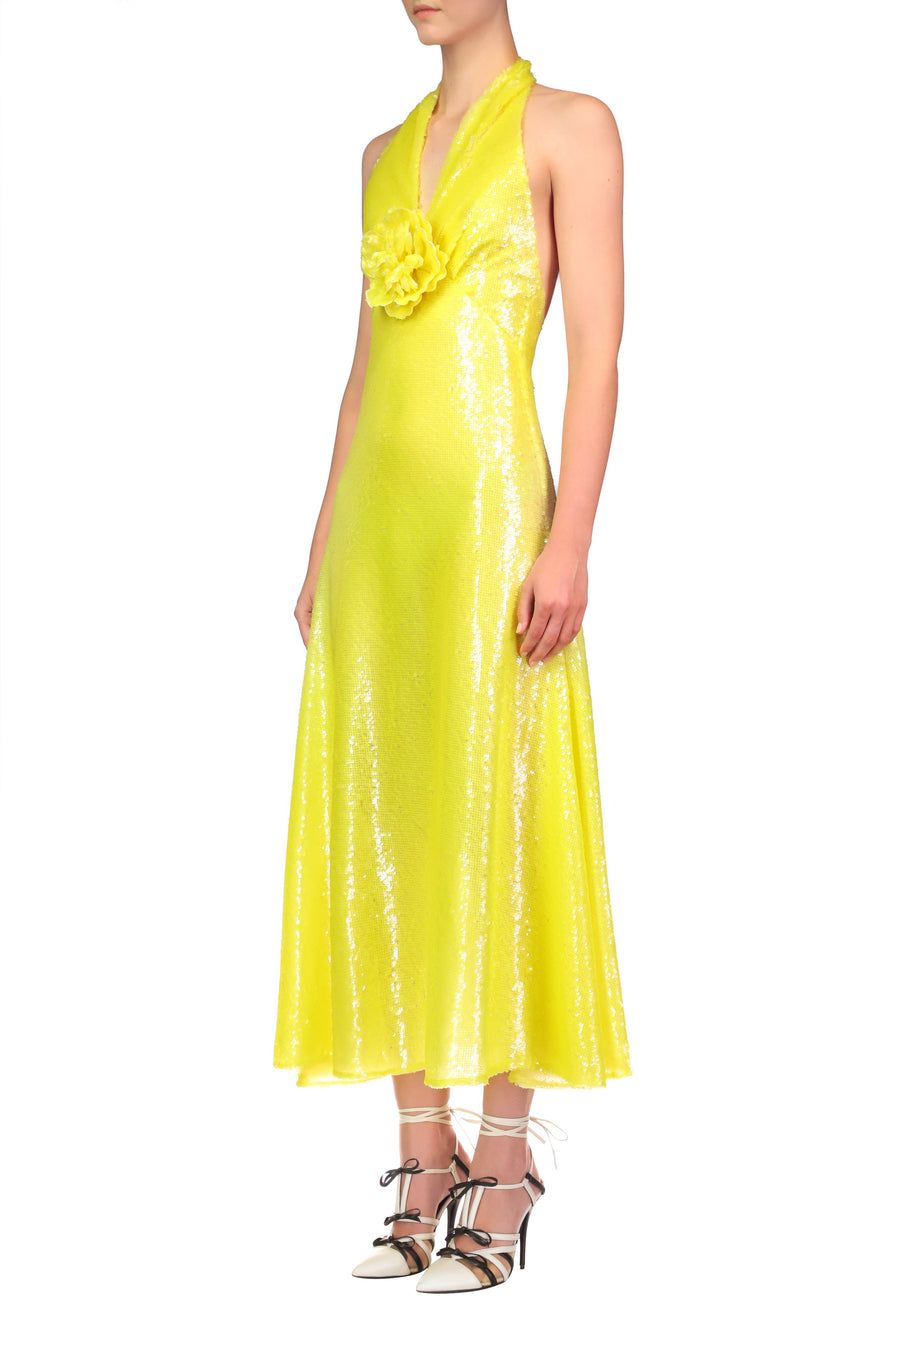 Yellow Sequin Halter Bias Dress With Flower Detail